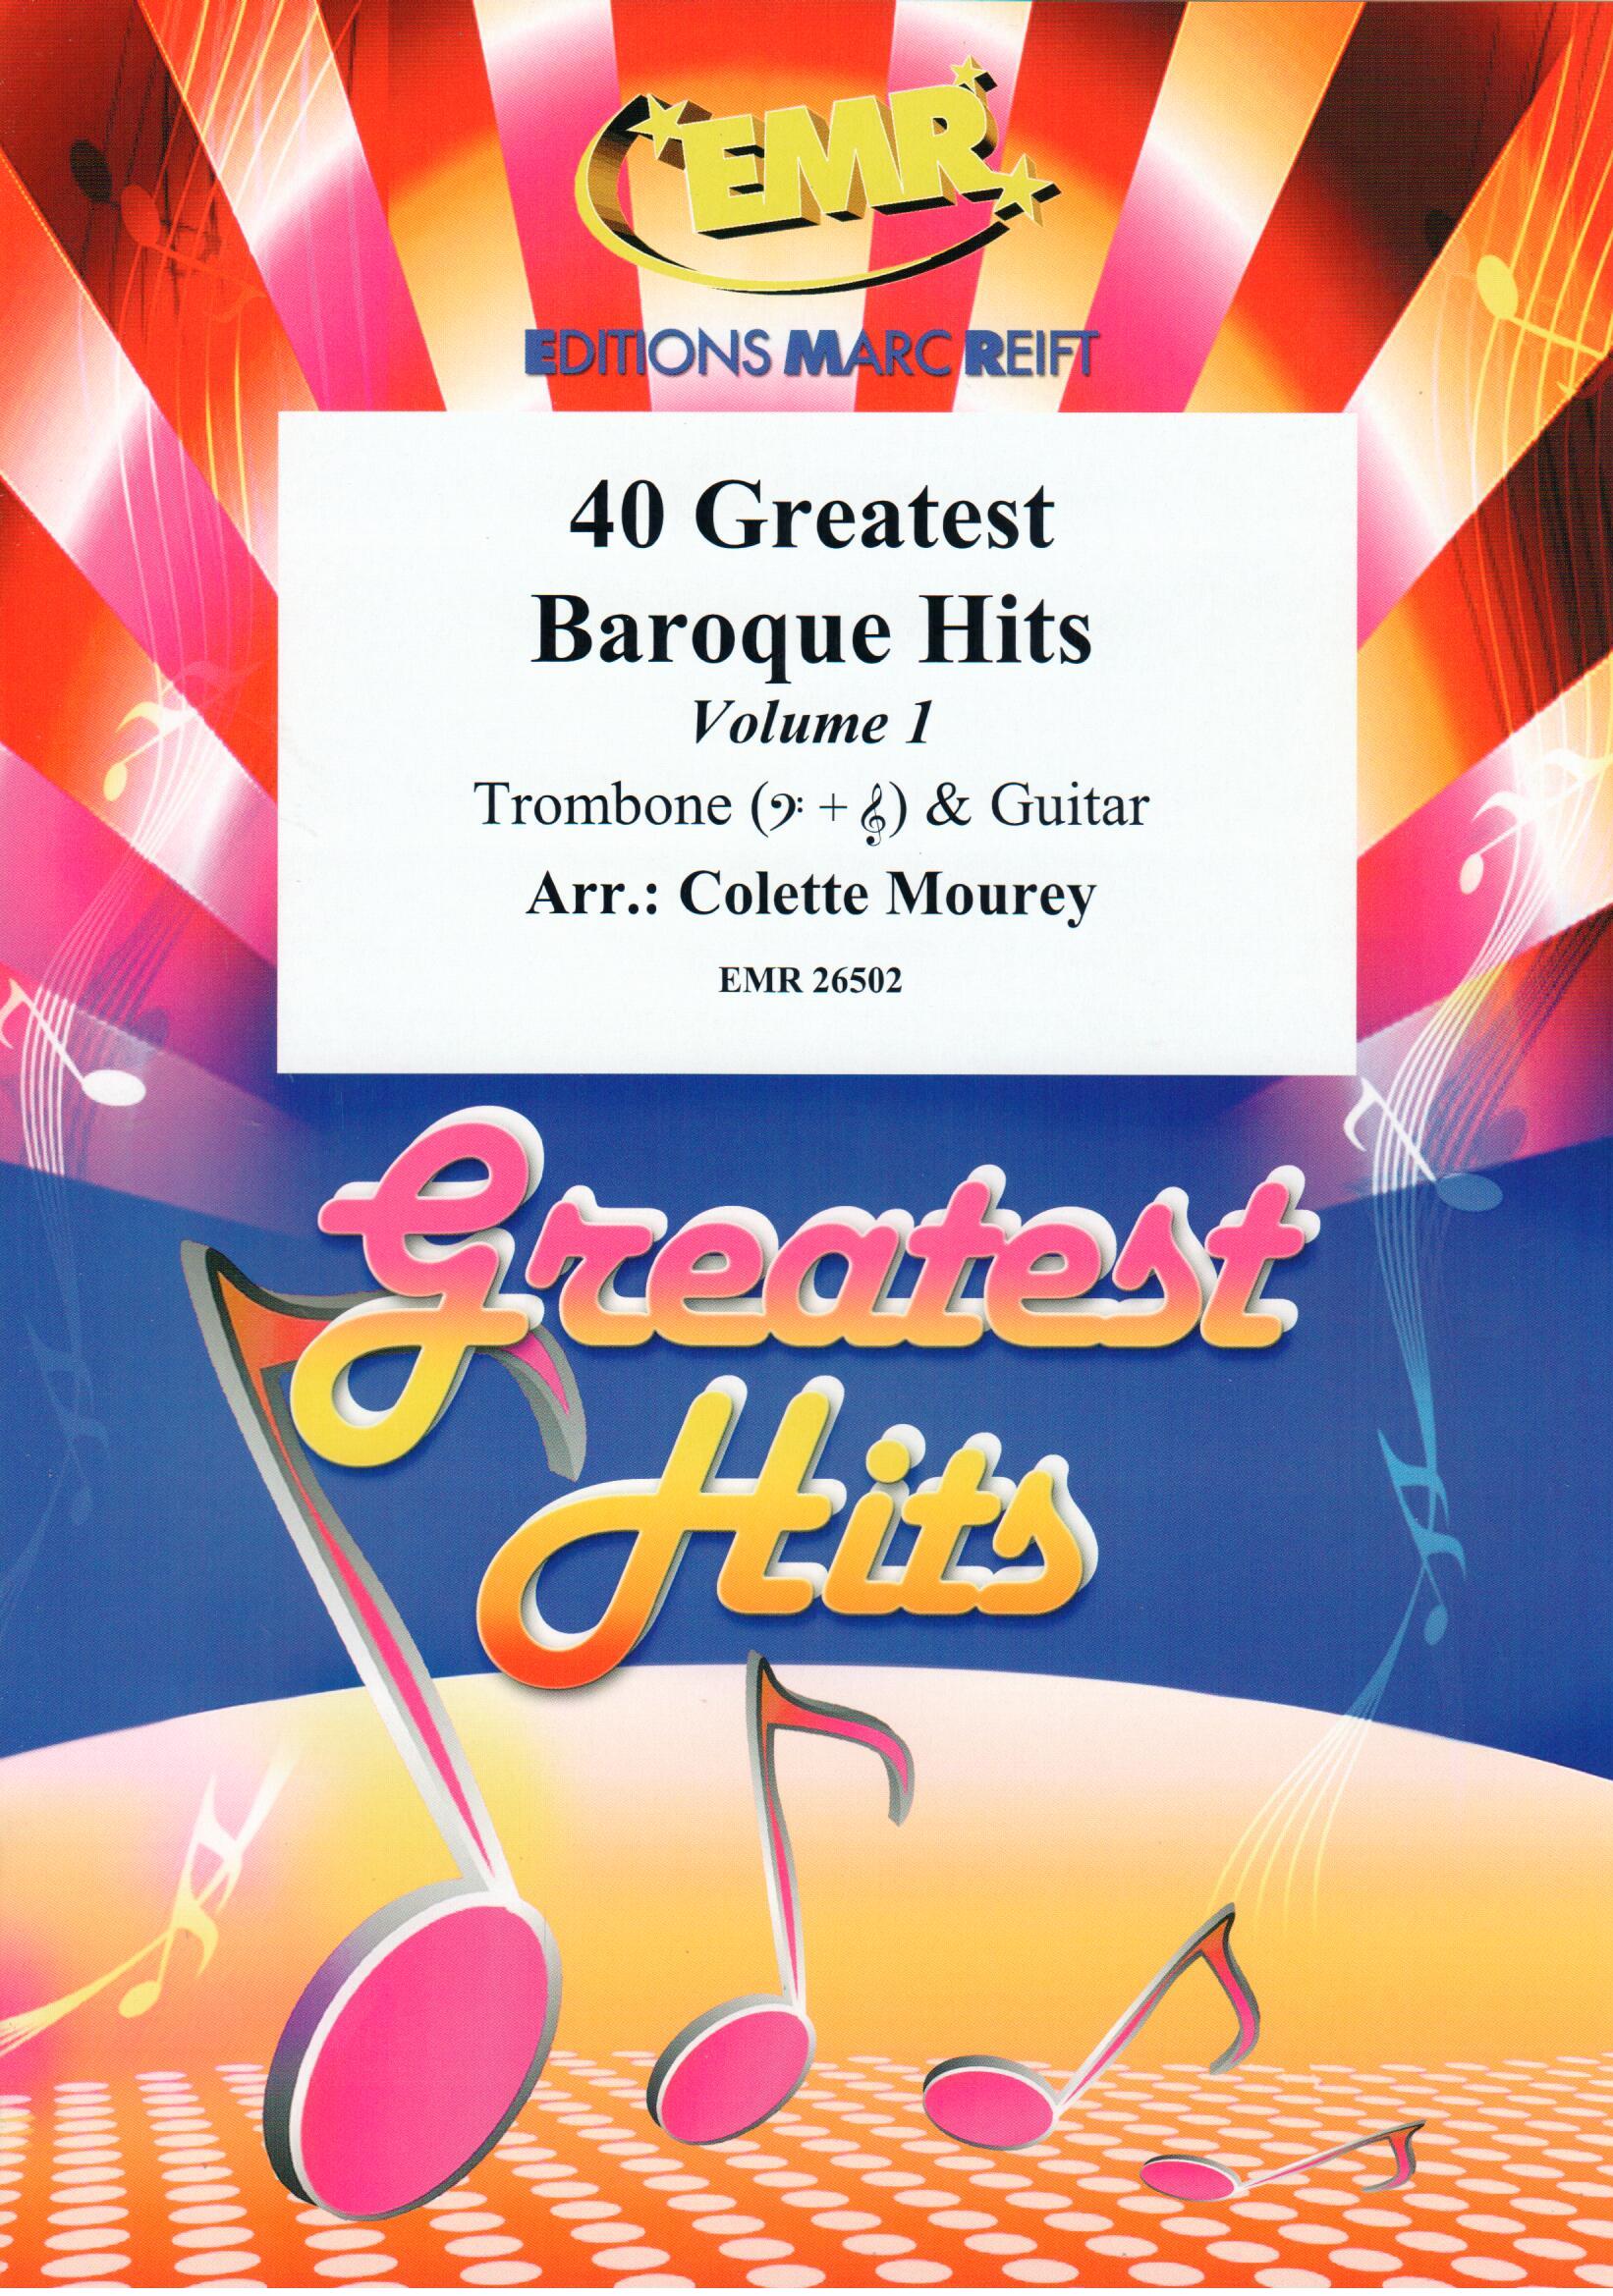 40 GREATEST BAROQUE HITS VOLUME 1